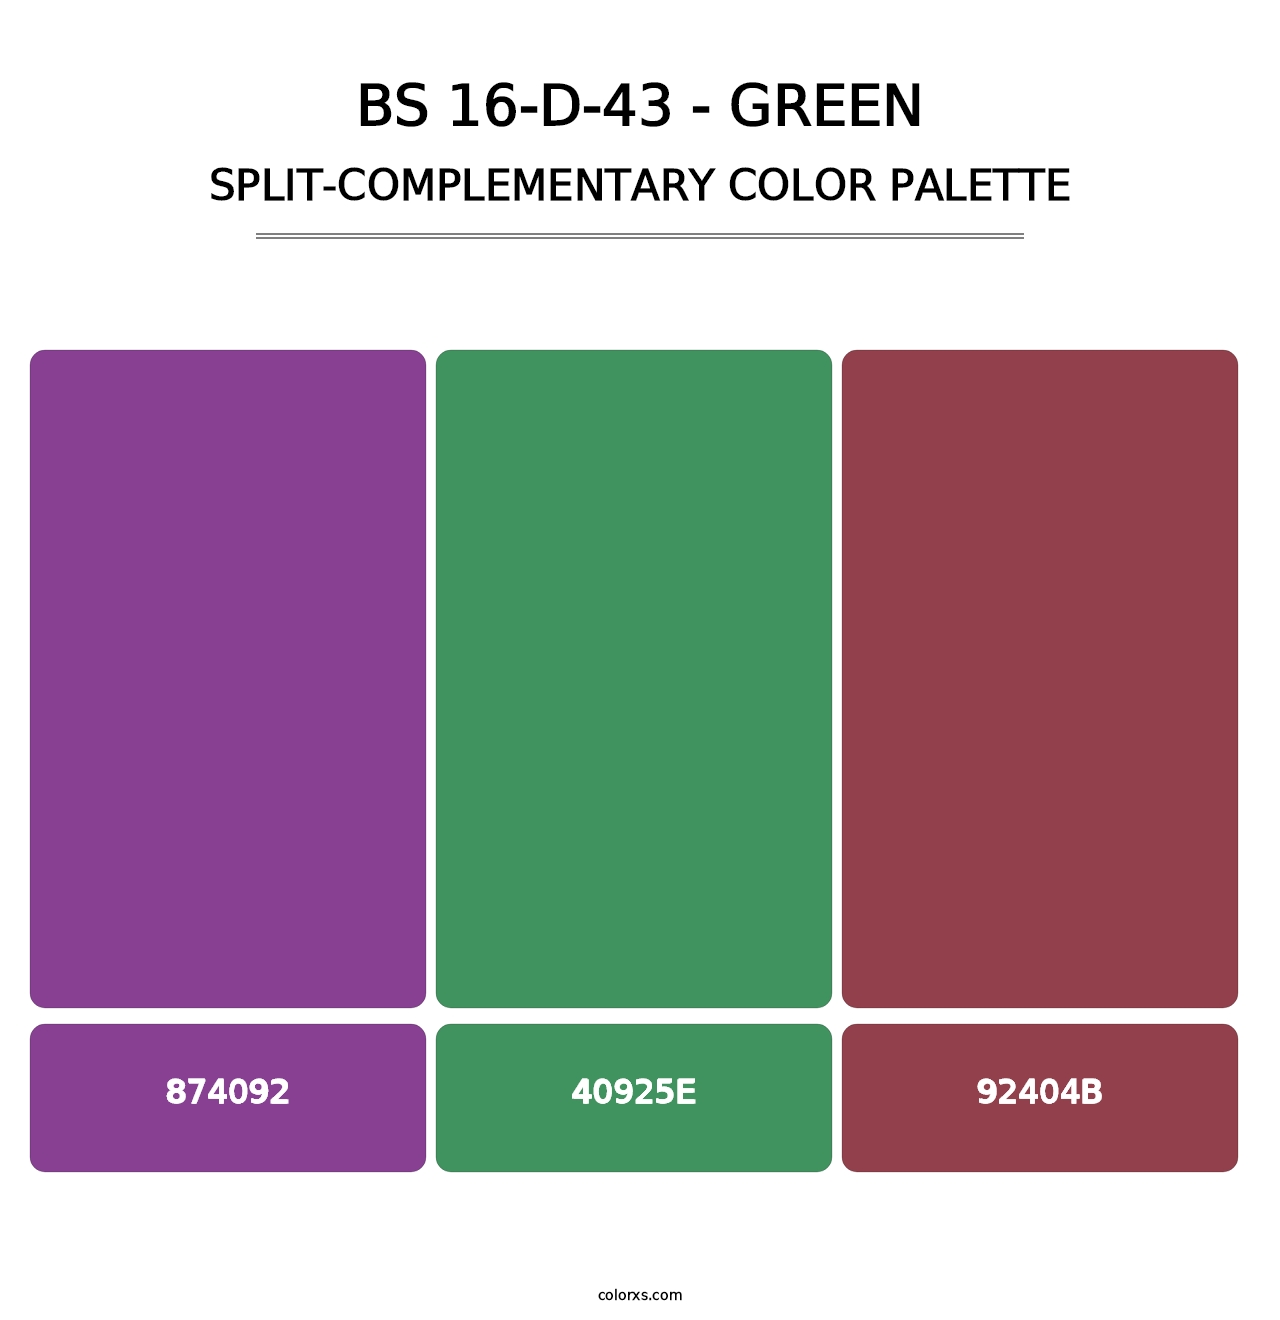 BS 16-D-43 - Green - Split-Complementary Color Palette